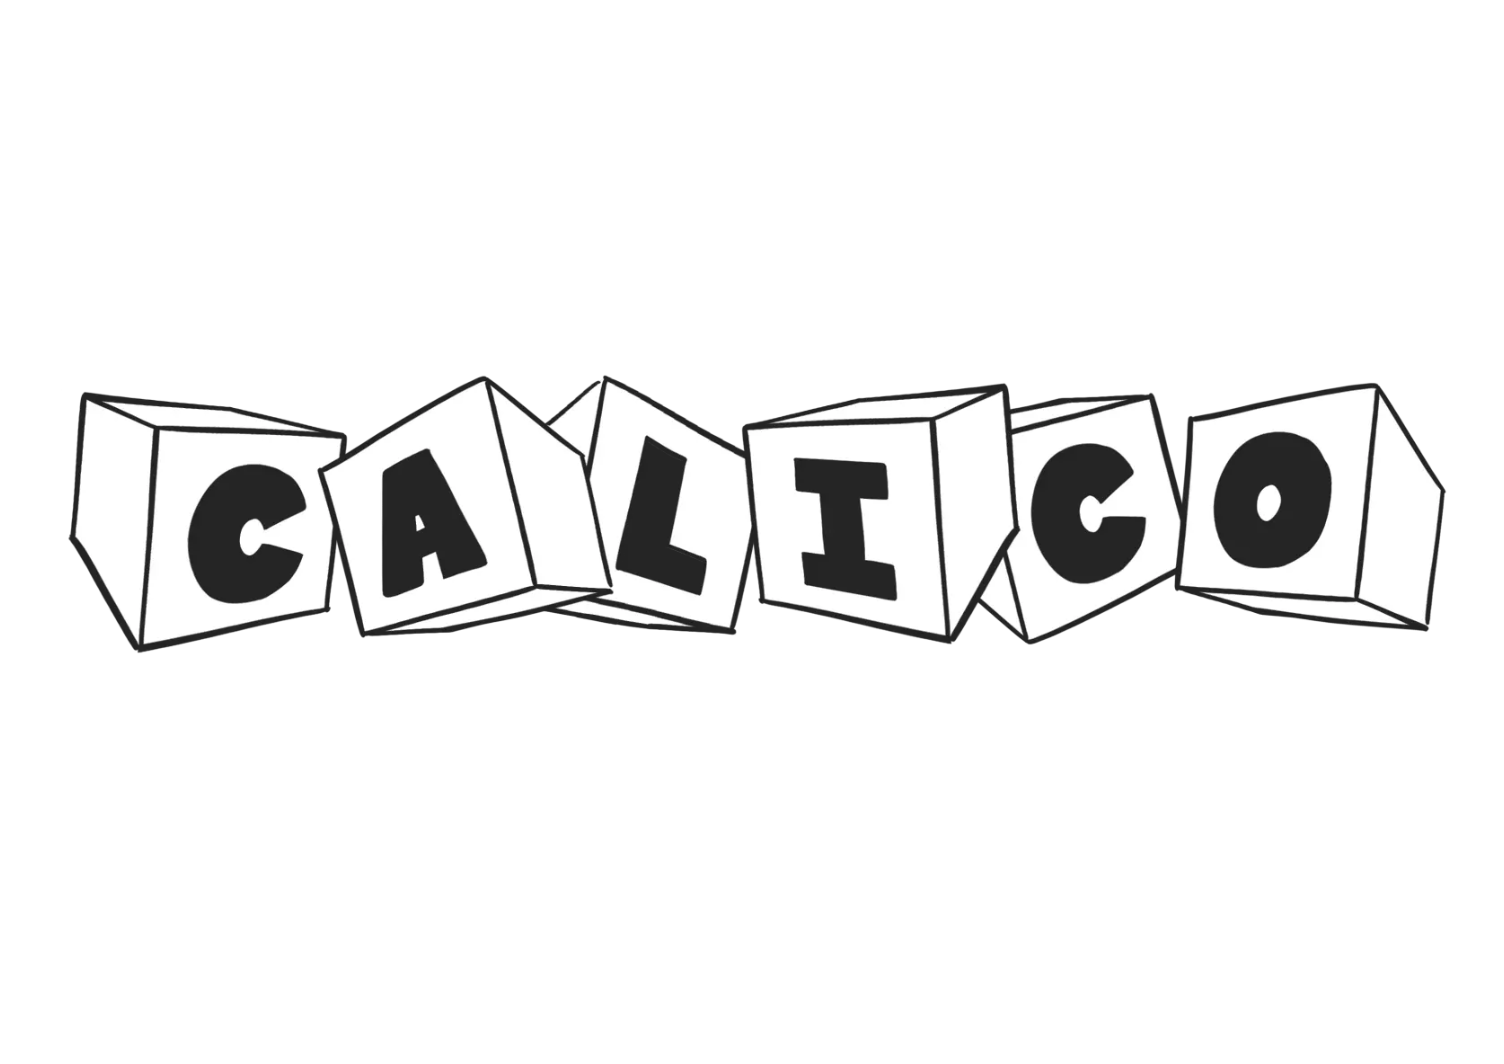 The CALICO Informatics Competition